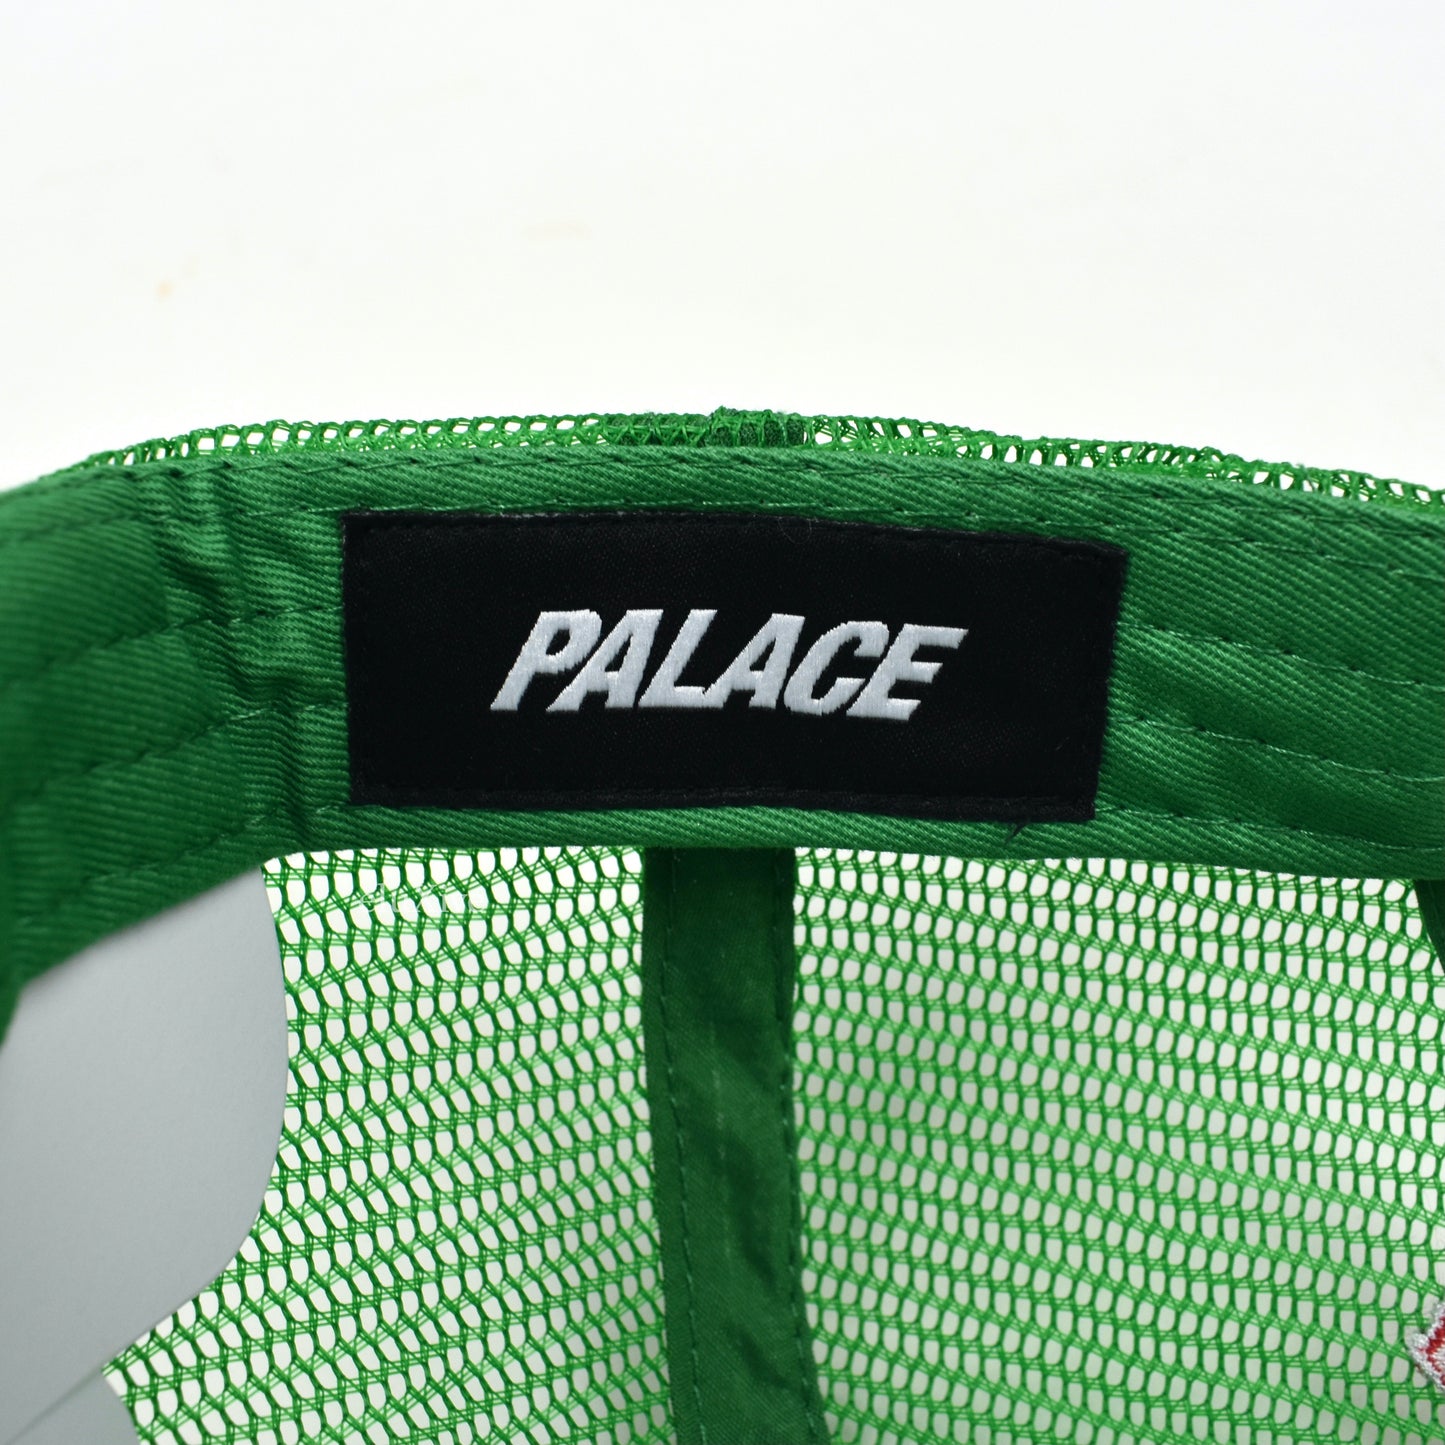 Palace - Strawberry Logo Trucker Hat (Green)